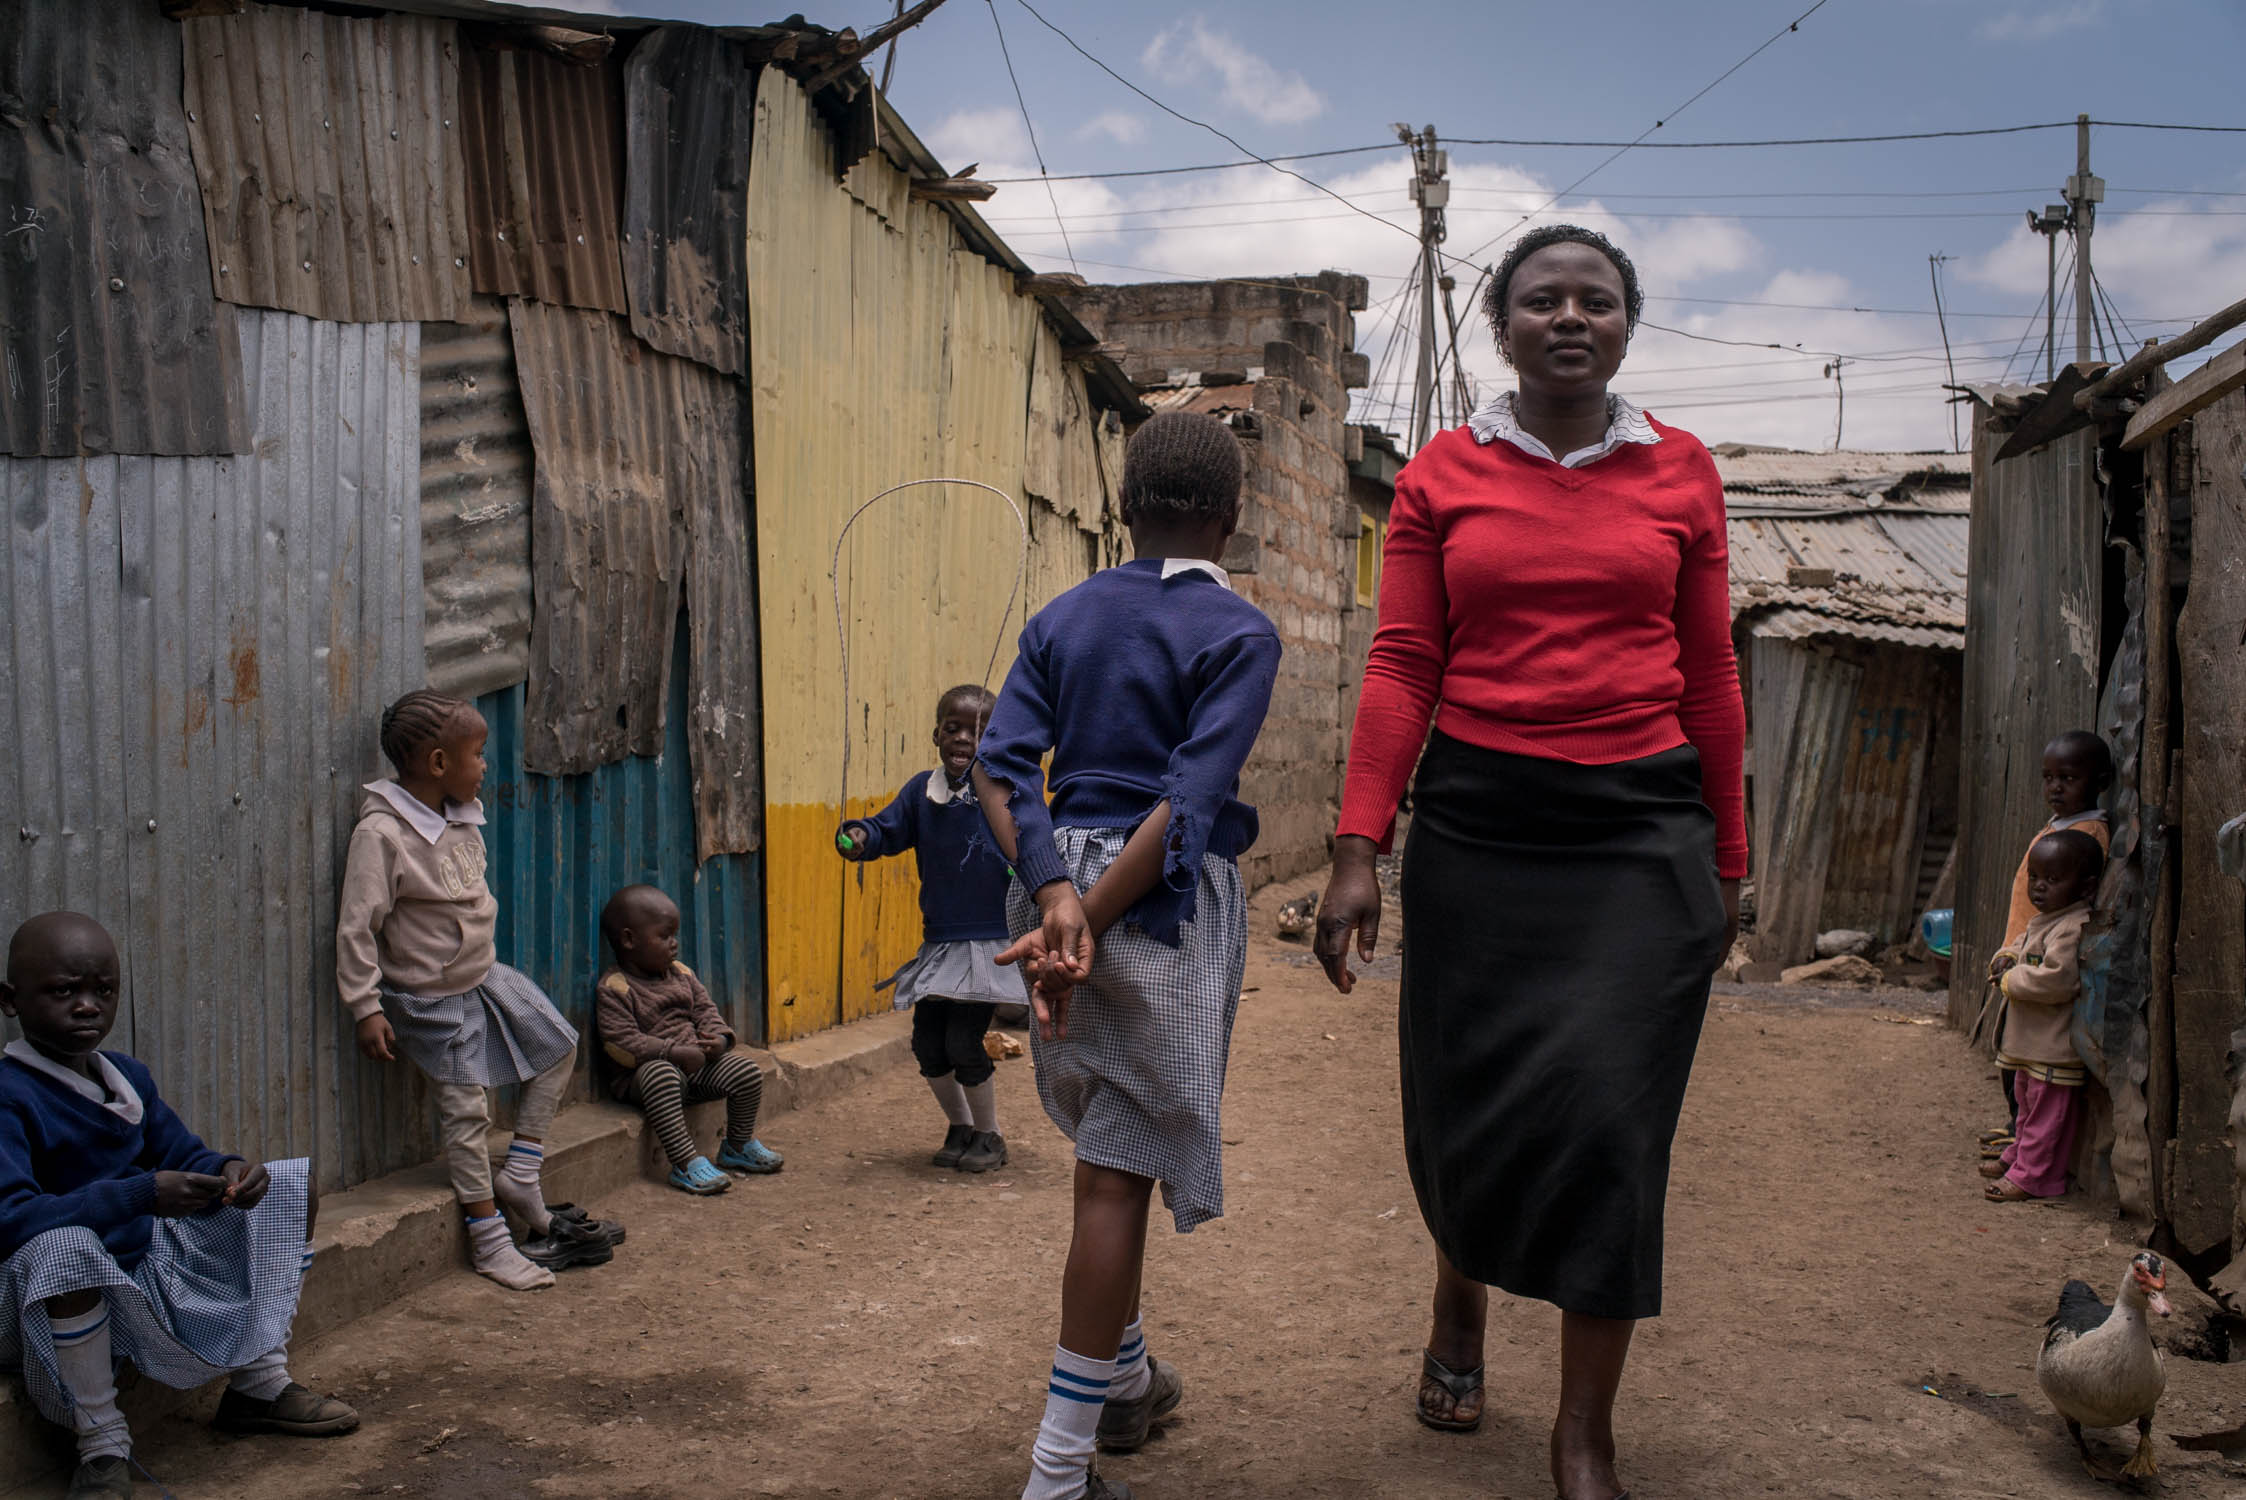  A teacher walks past children at a school (not Bridge) in Mathare slum area of Nairobi. September 19, 2016. Mathare slum, Nairobi, Kenya.&nbsp; 